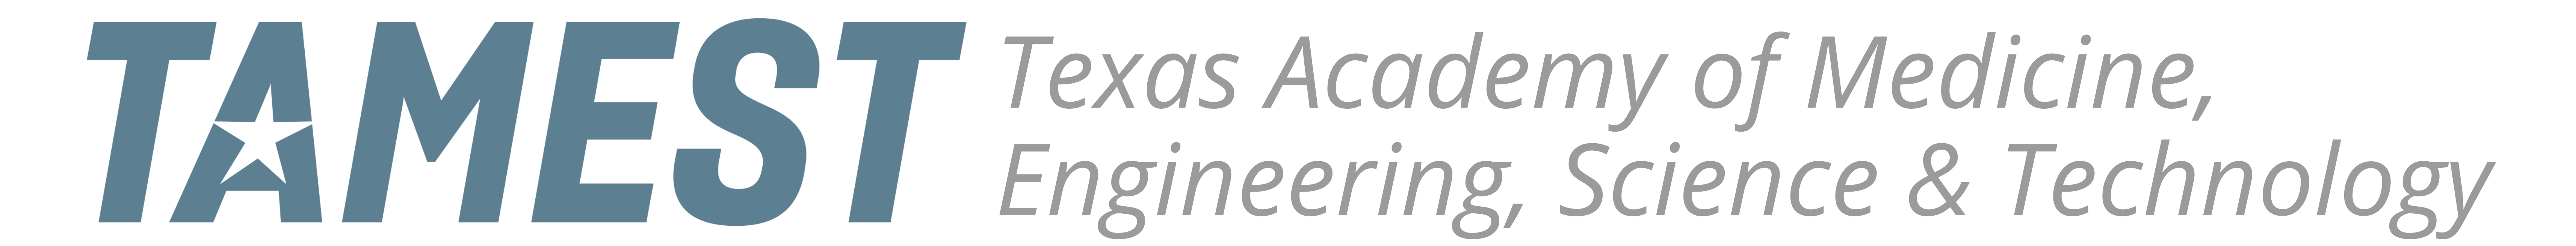 TAMEST (Texas Academy of Medicine, Engineering, Science & Technology)